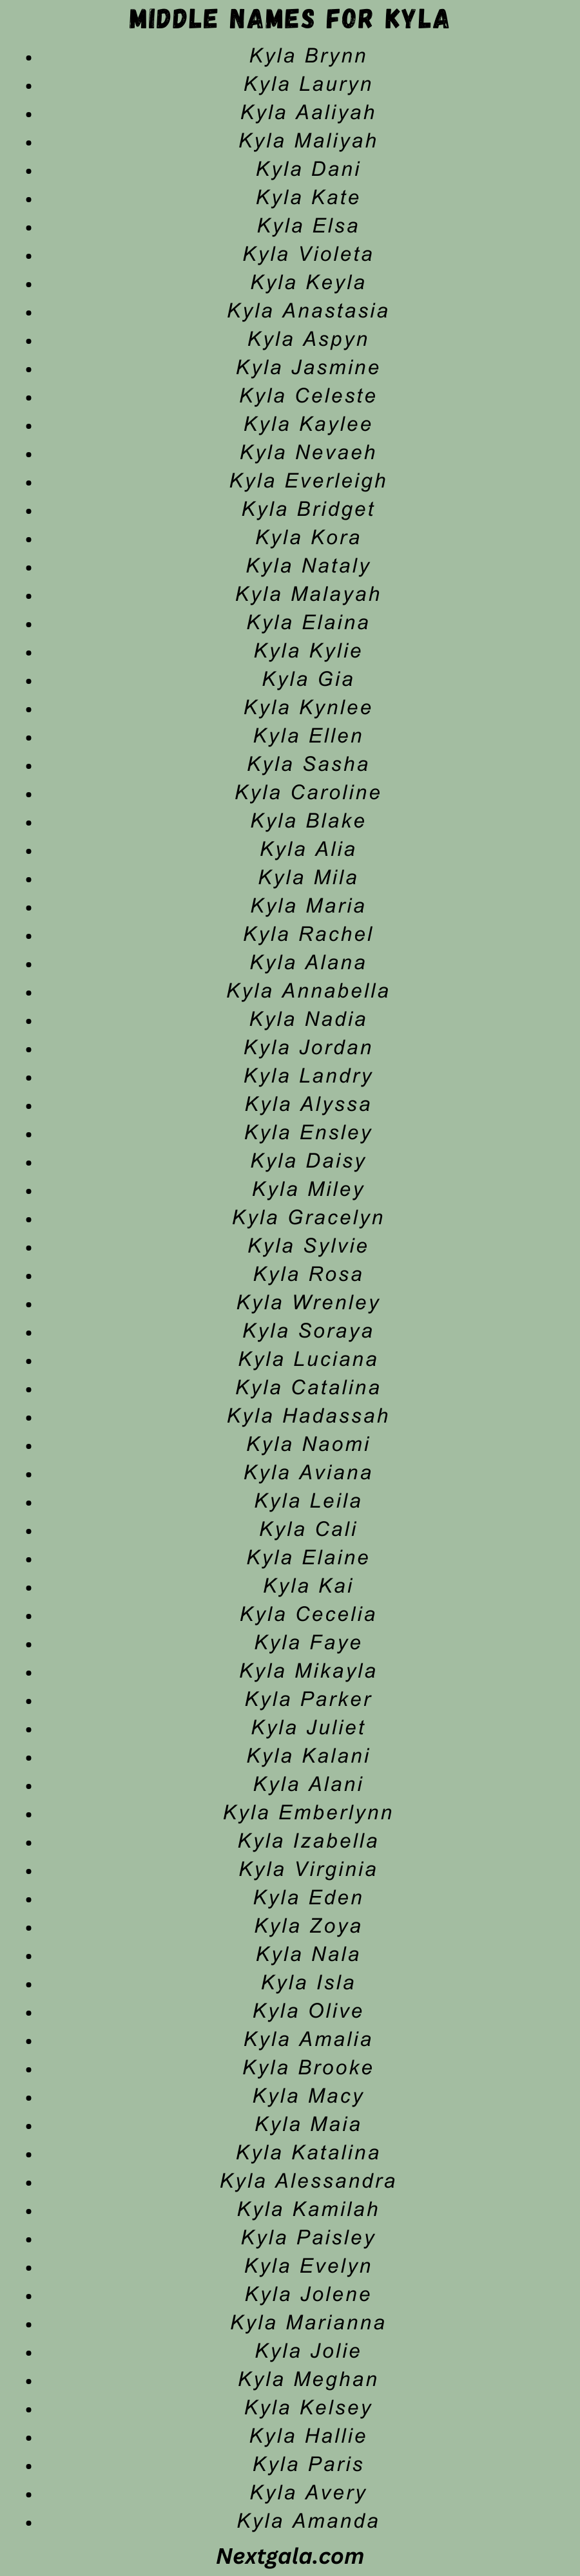 Middle Names For Kyla